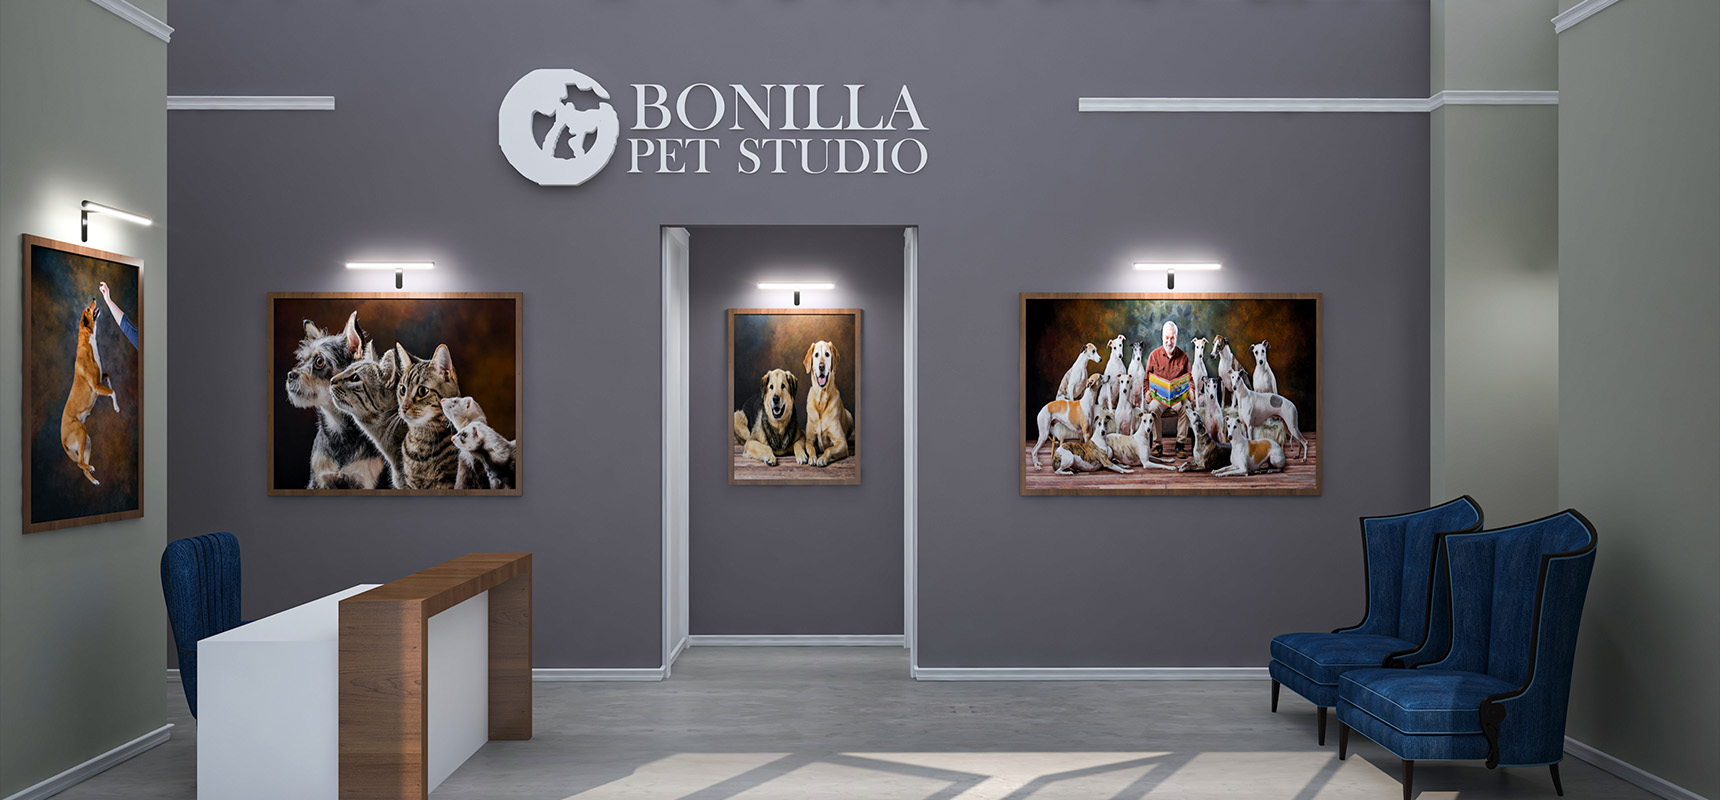 Interior Design for Bonilla Pet Studio